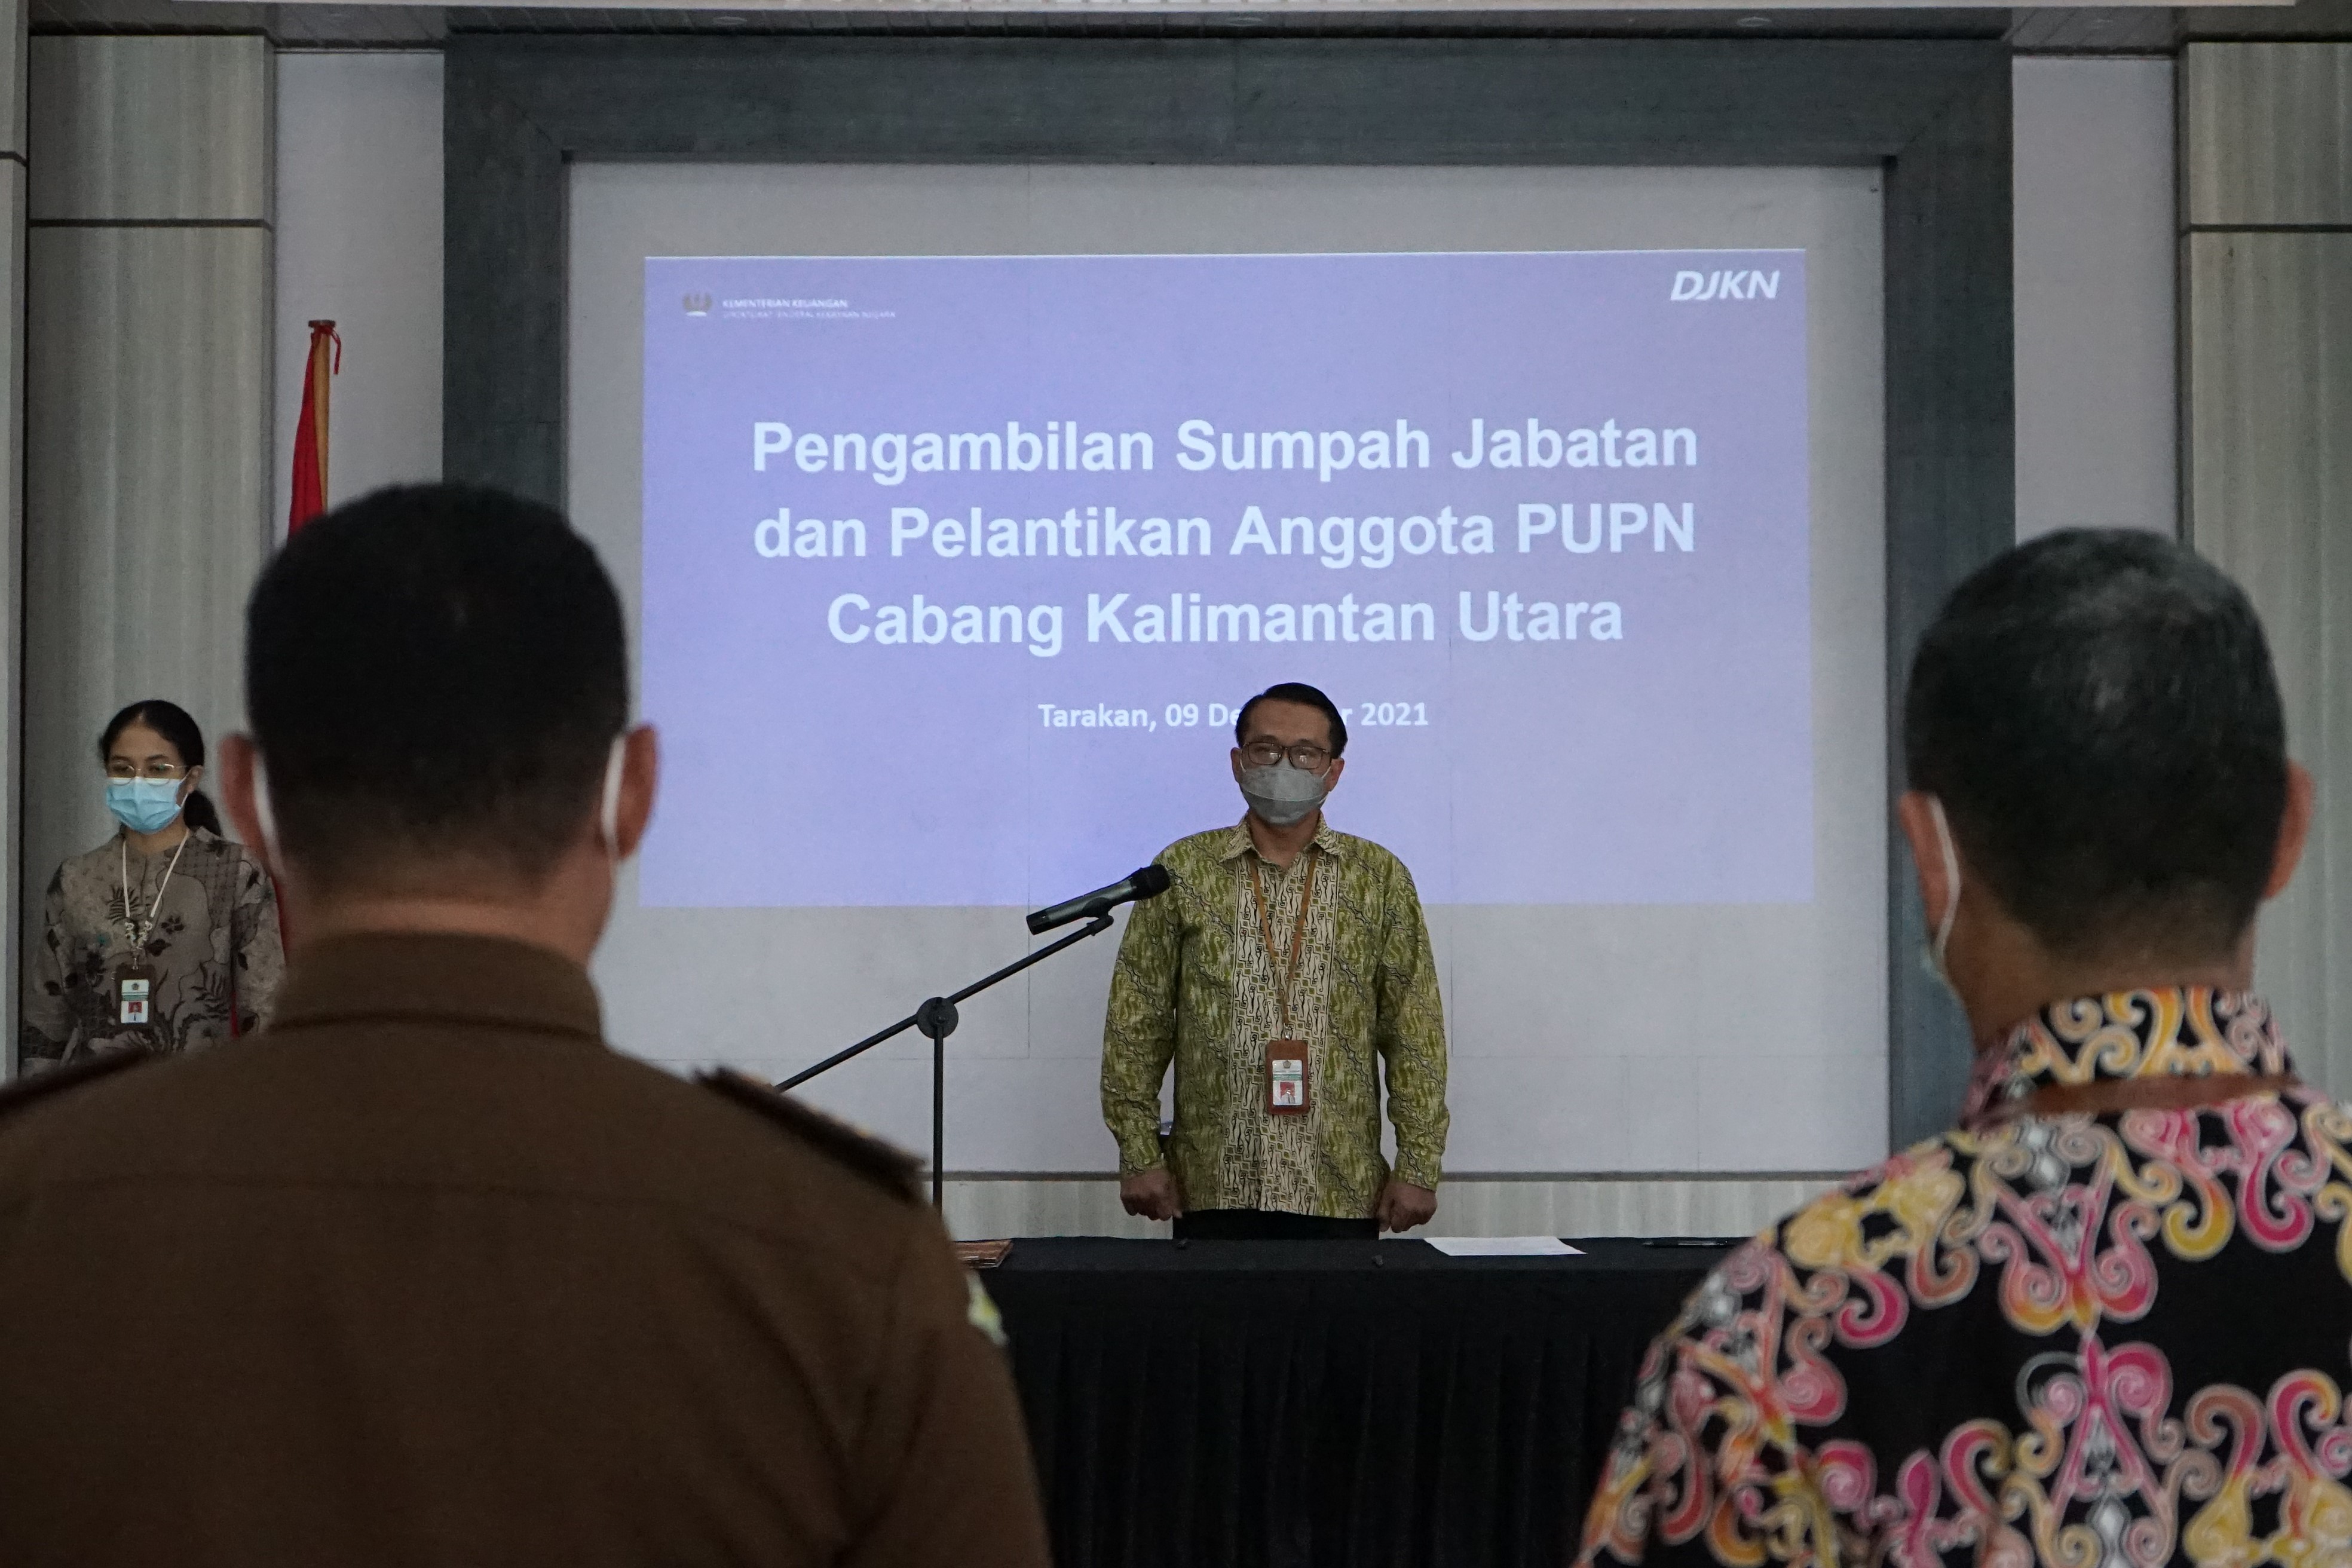 Pelantikan Anggota PUPNC Kaltara, Ketua PUPNC: Dengan Sinergi dan Kerja Sama, Kita Optimalkan Pengembalian Hak Negara